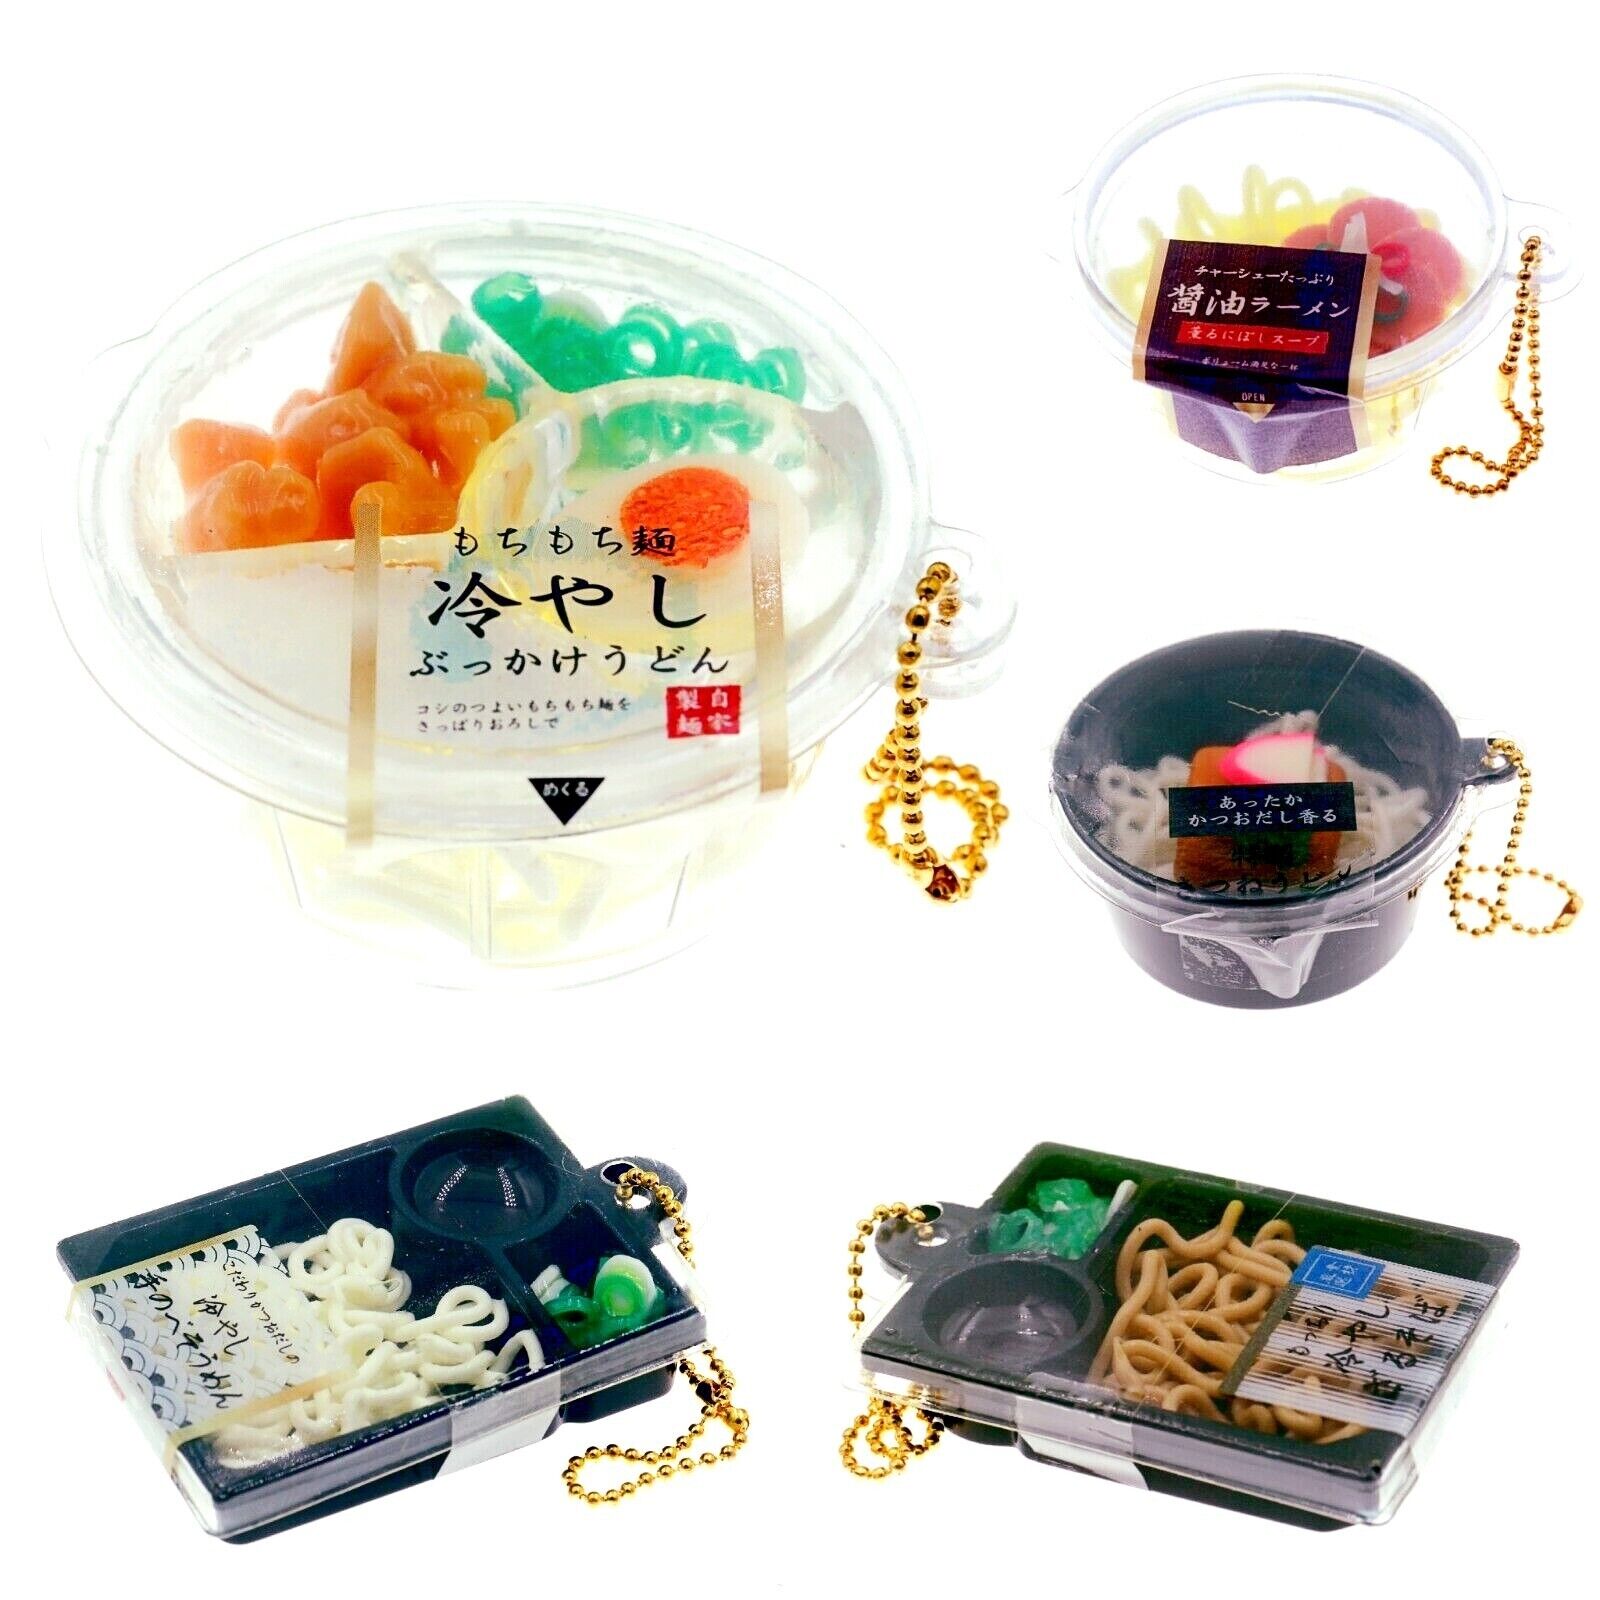 Blind Box Japanese Fake Food Keychain Noodles Phone Charm 1 Random Miniature Toy